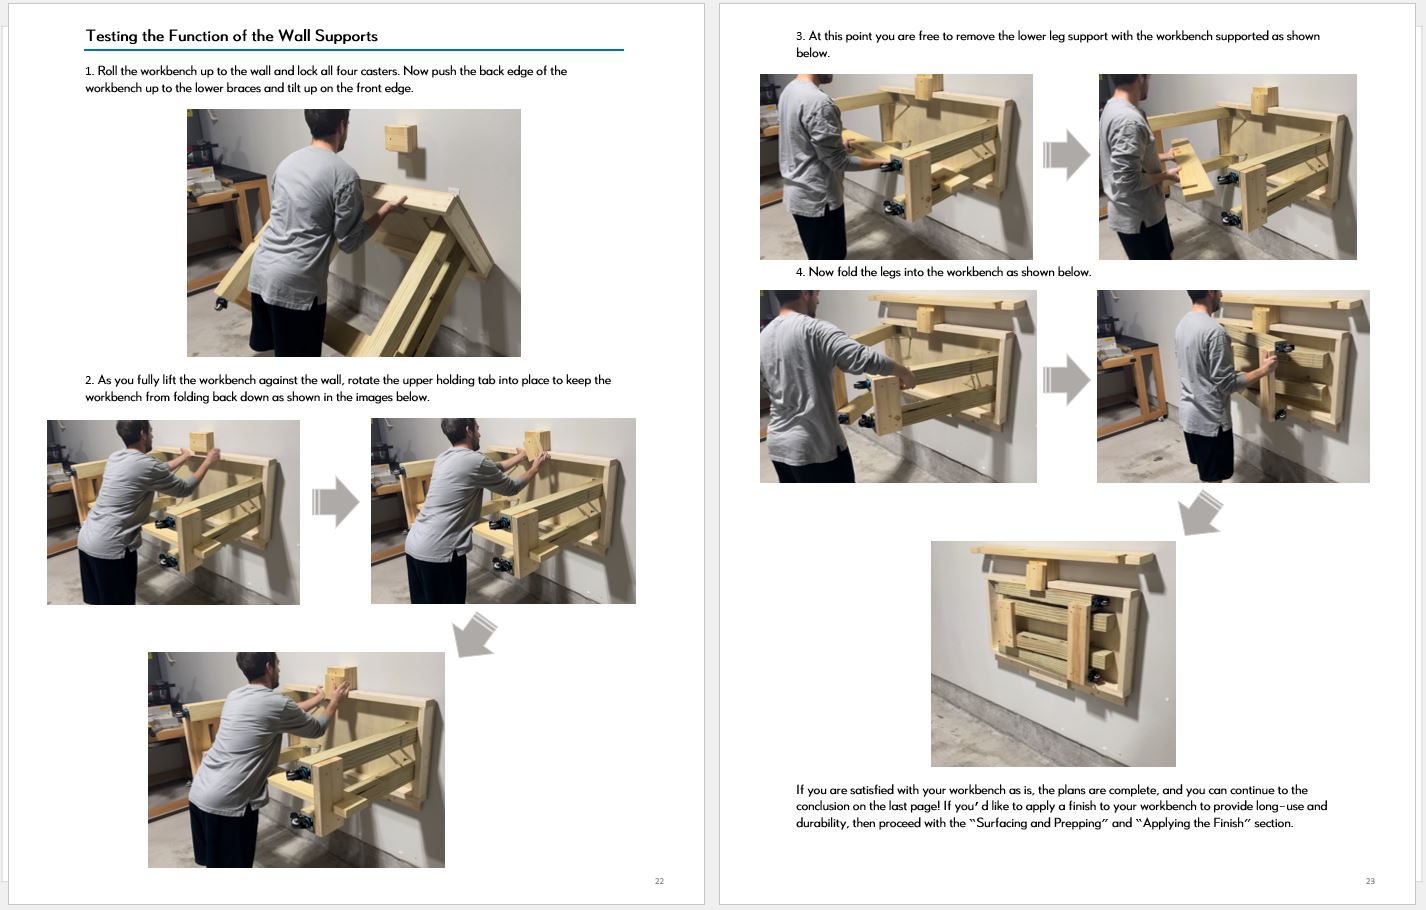 Foldable, Mobile Workbench - Instant PDF Download - DIY